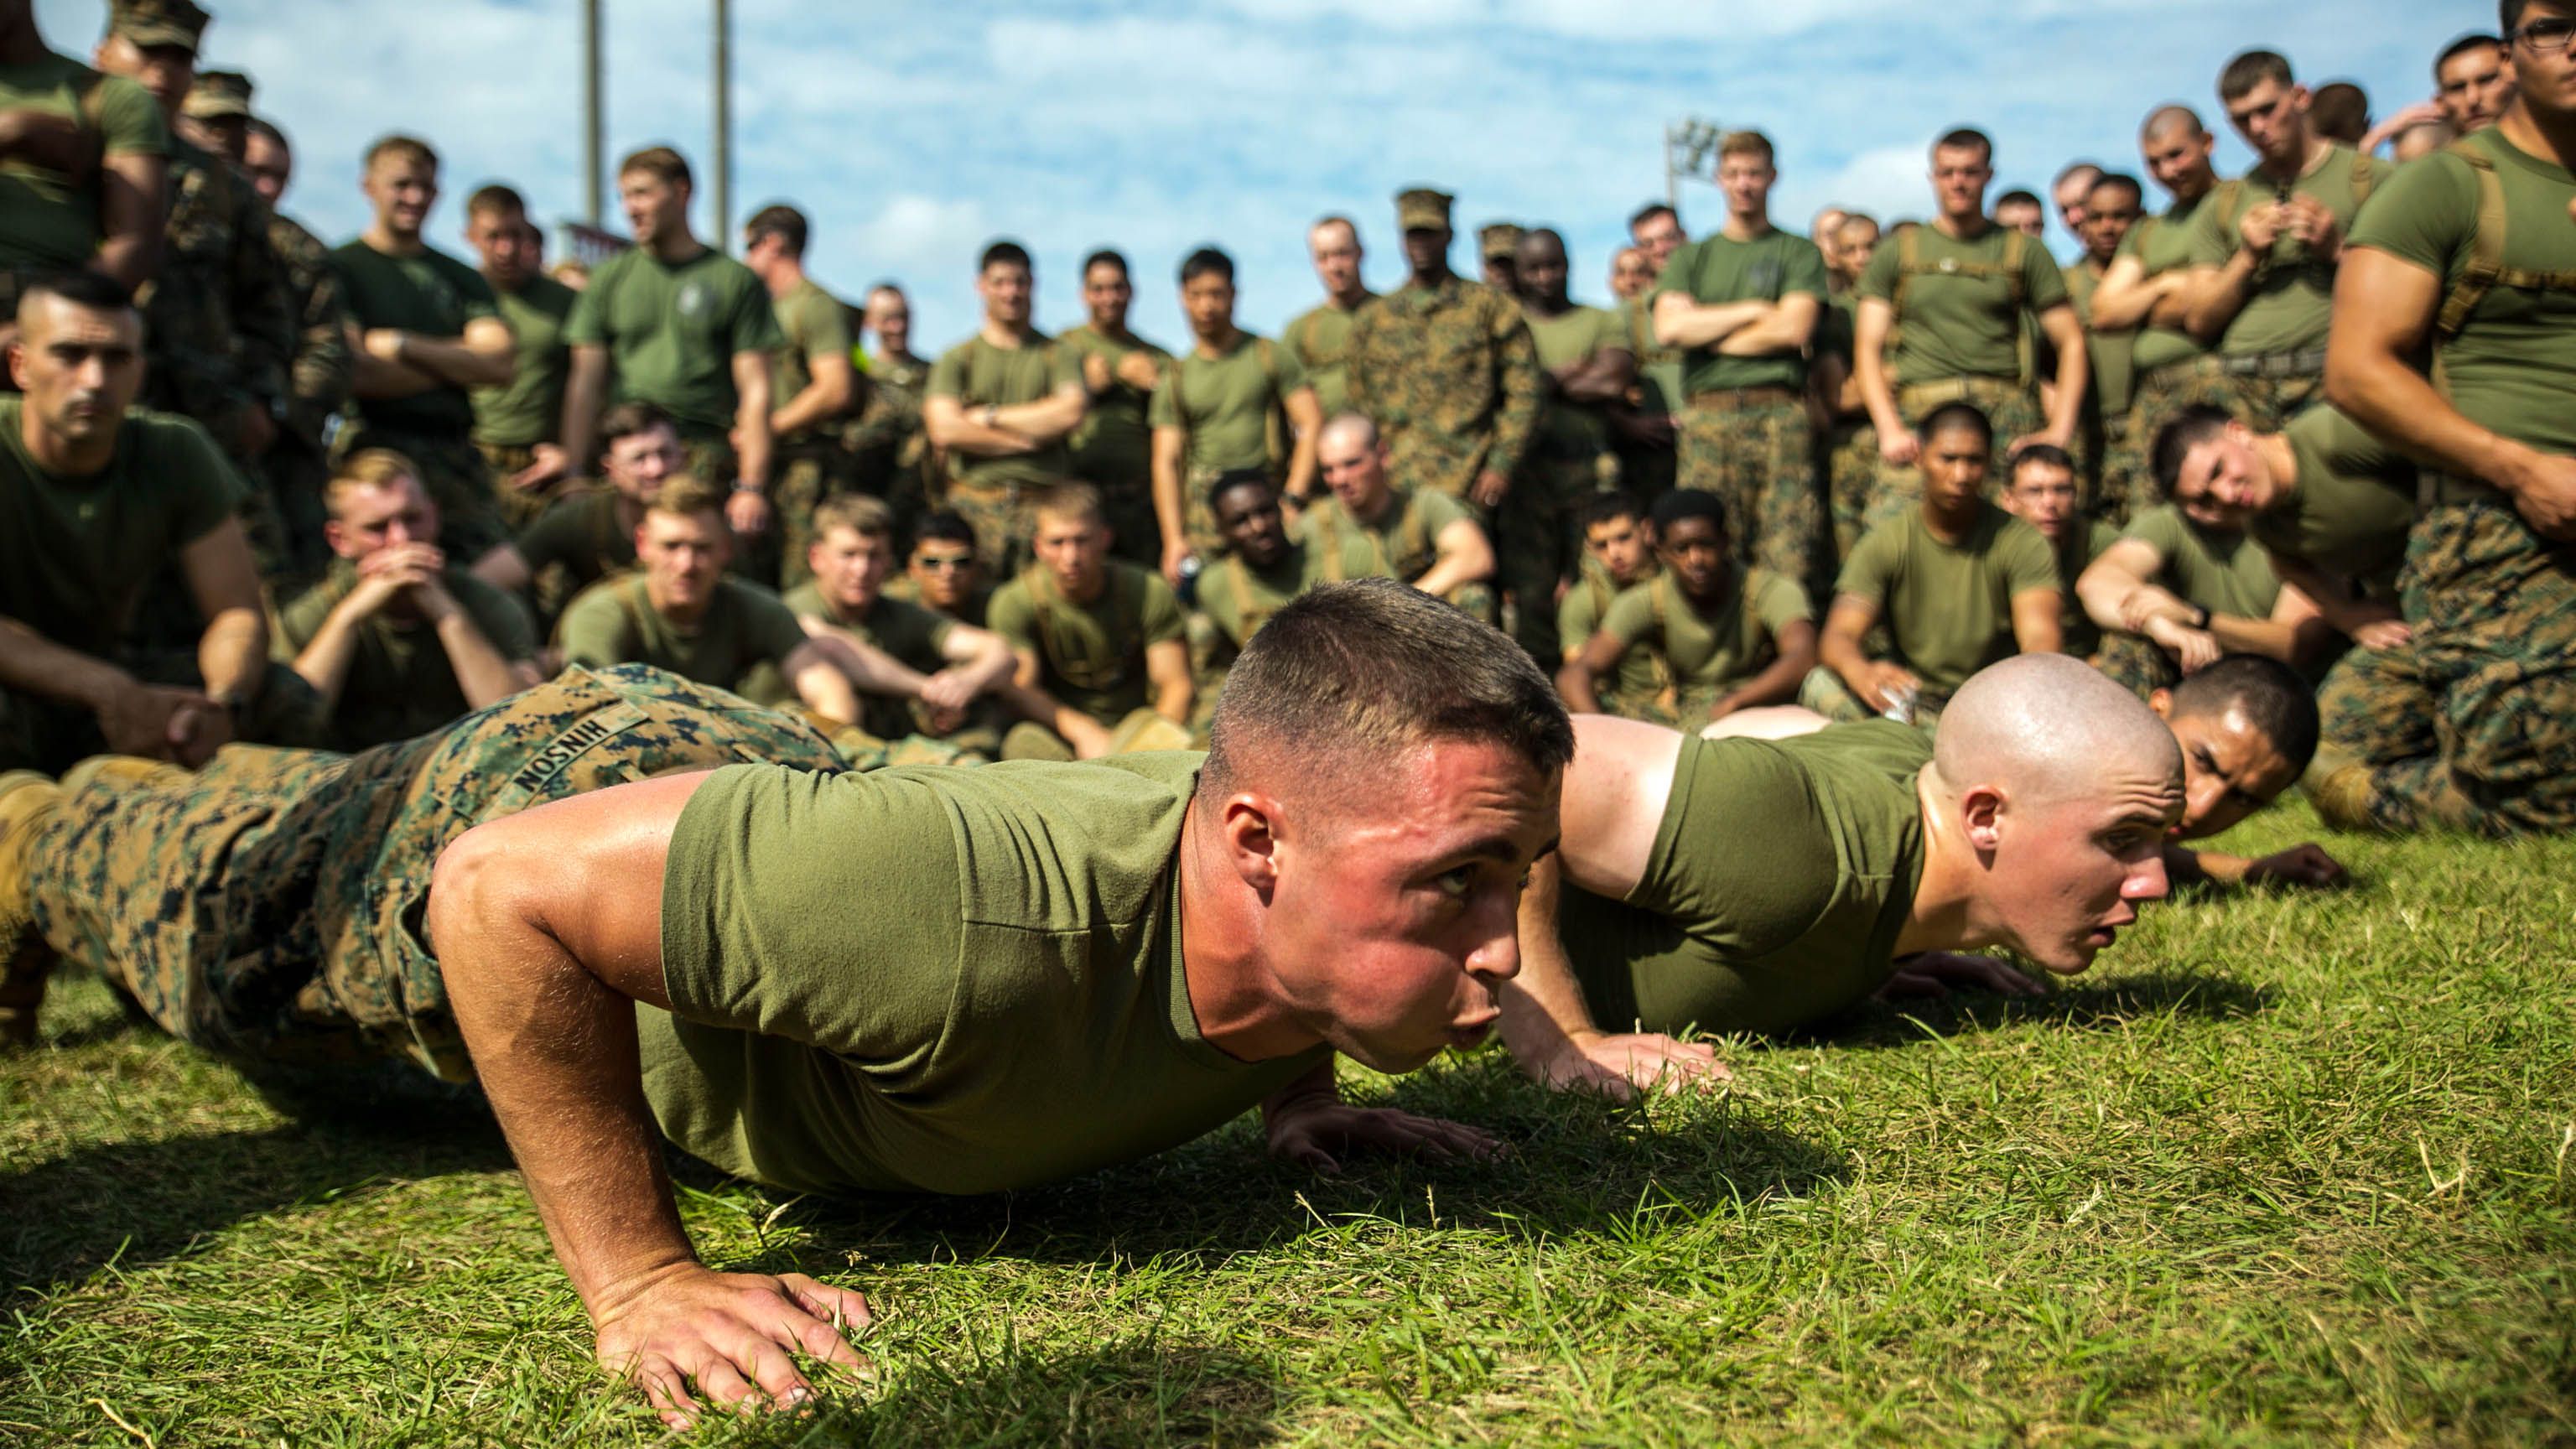 Marine Corps Pft Workout Plan Blog Dandk